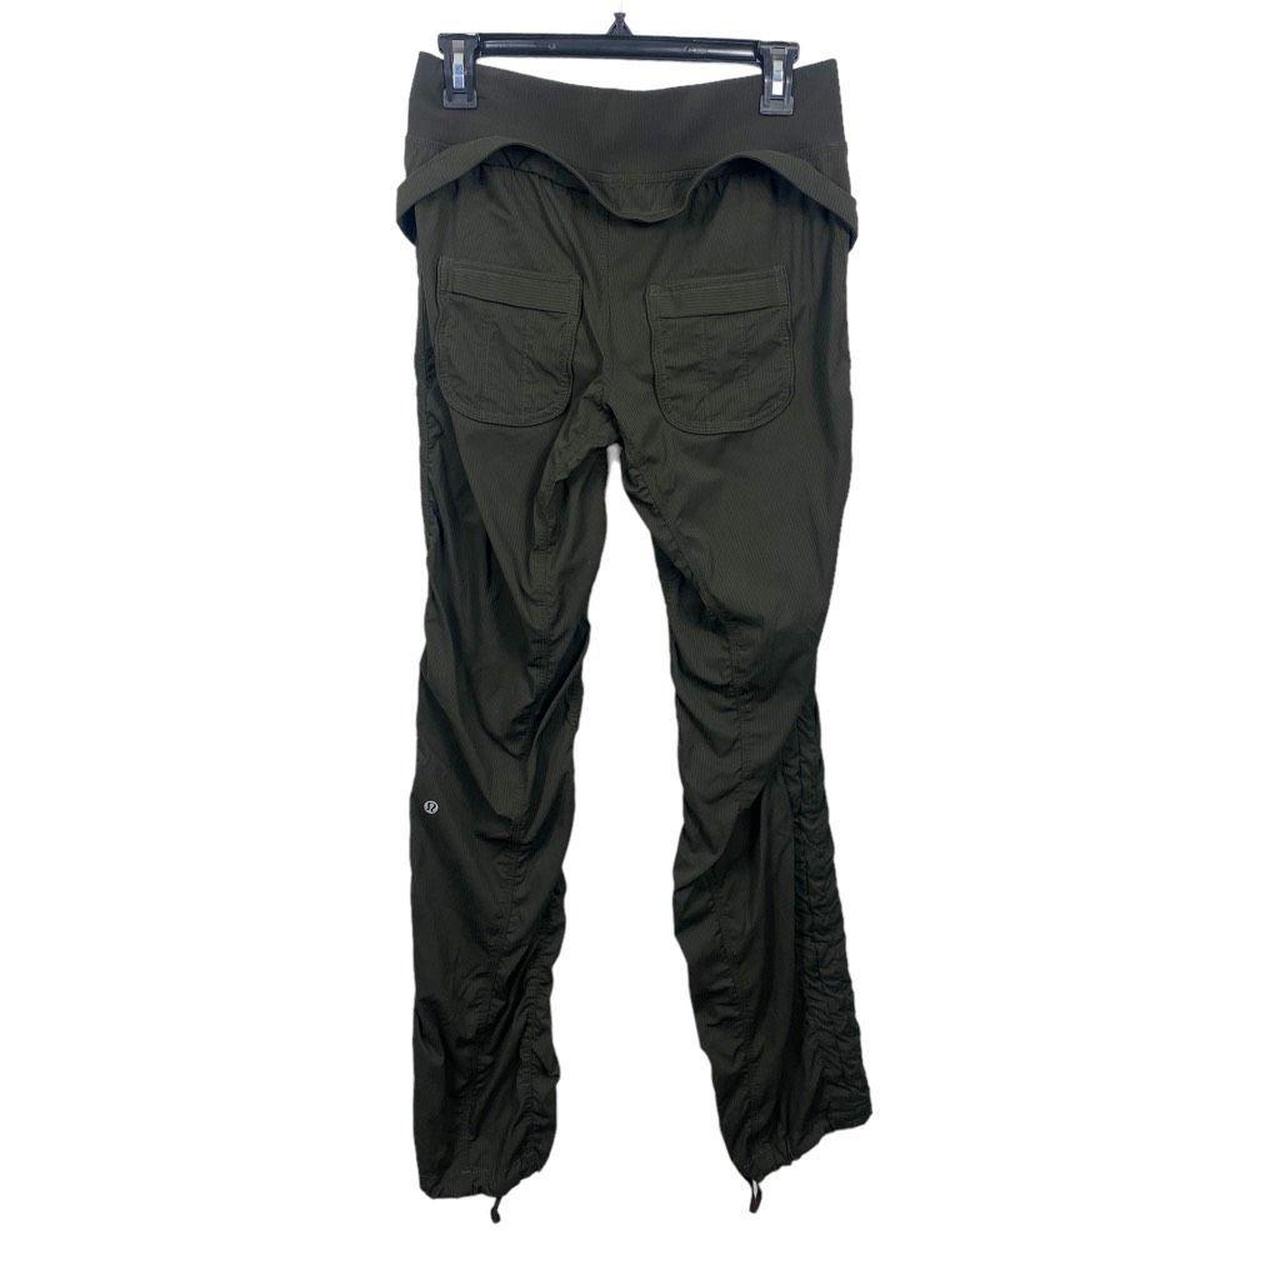 Lululemon cargo leggings with pockets in a size 6 - Depop